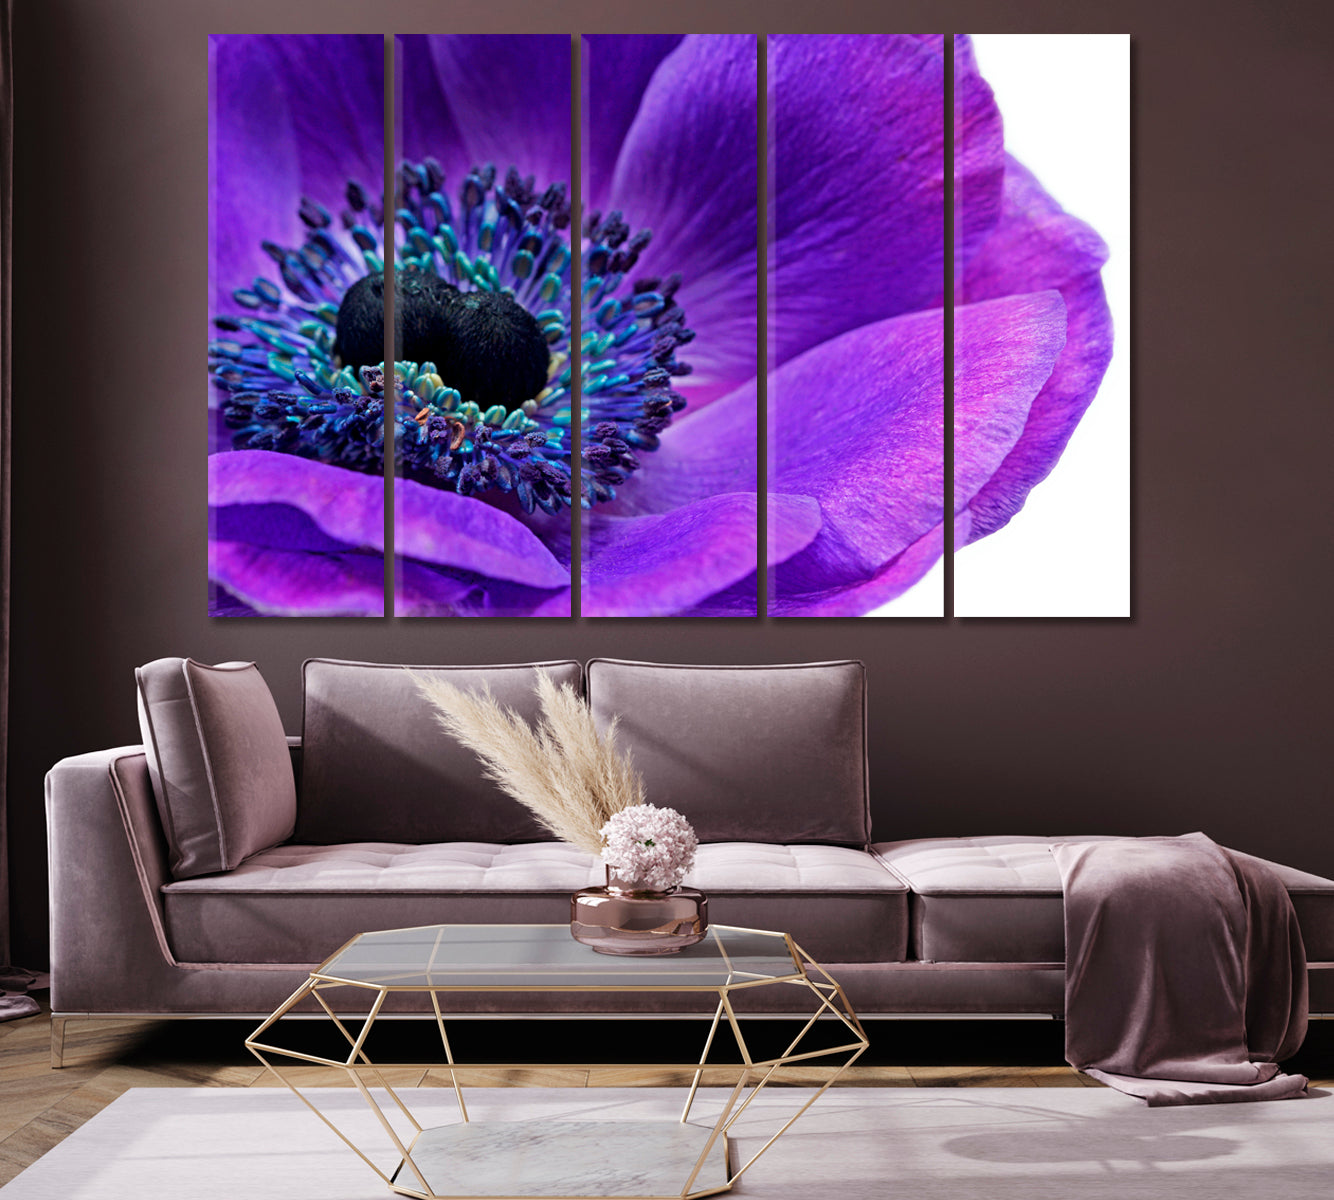 Ultra Violet Anemone Flower Canvas Print-Canvas Print-CetArt-1 Panel-24x16 inches-CetArt